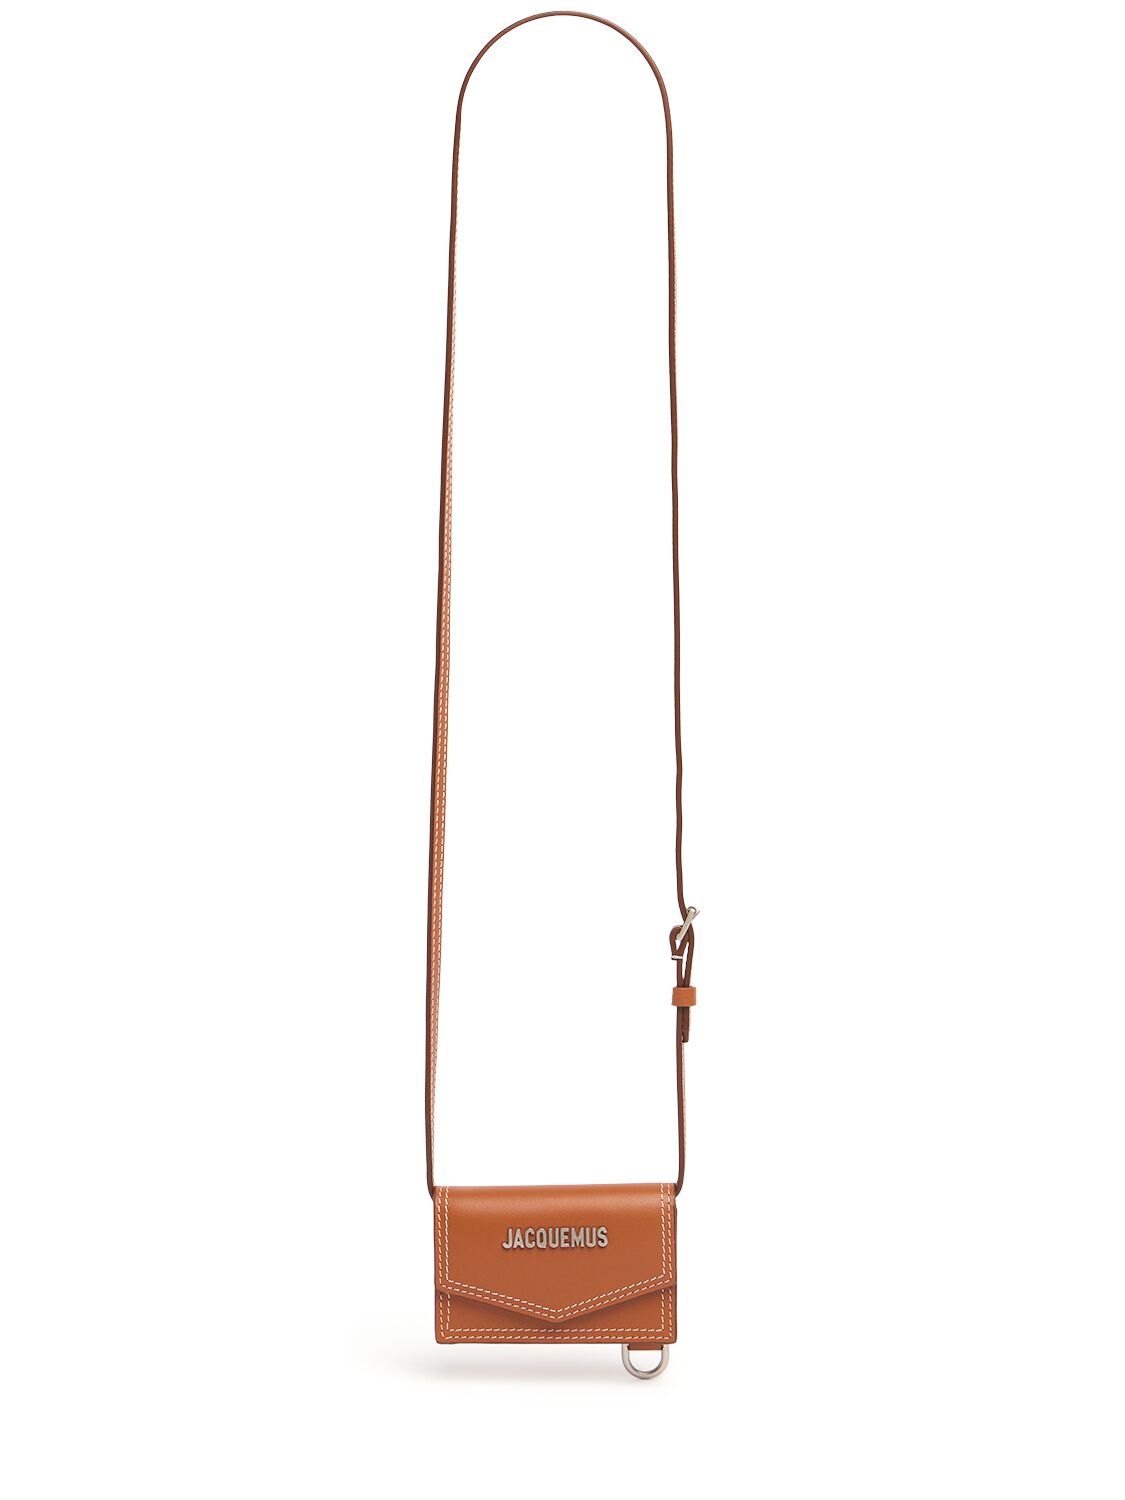 Jacquemus Le Porte Azur Leather Clutch Bag In Light Brow2